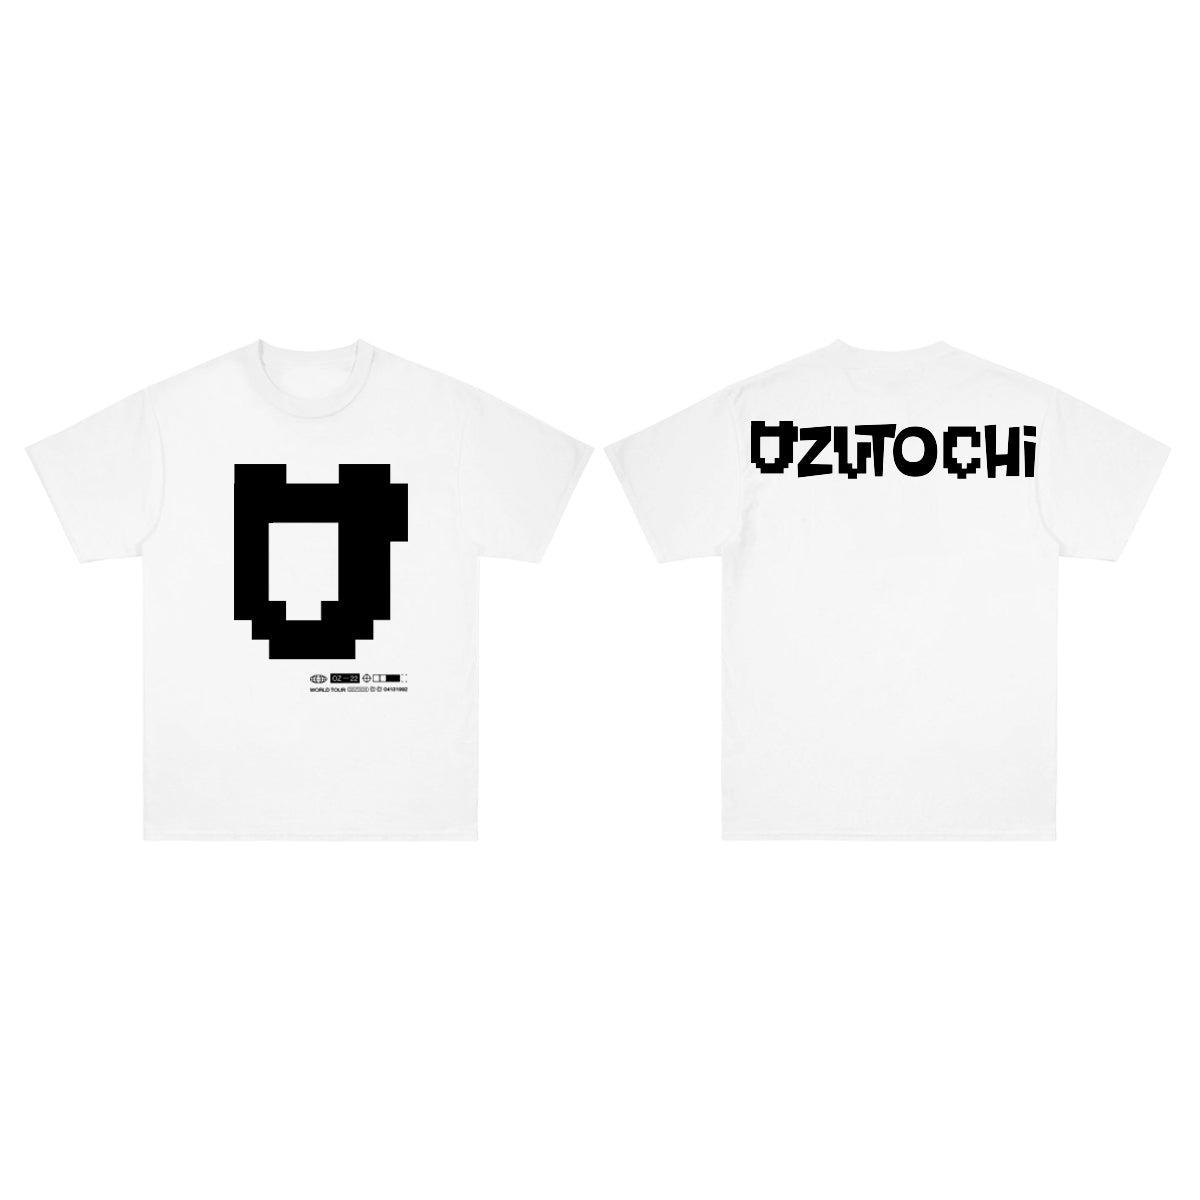 OZUTOCHI Logo White T-Shirt